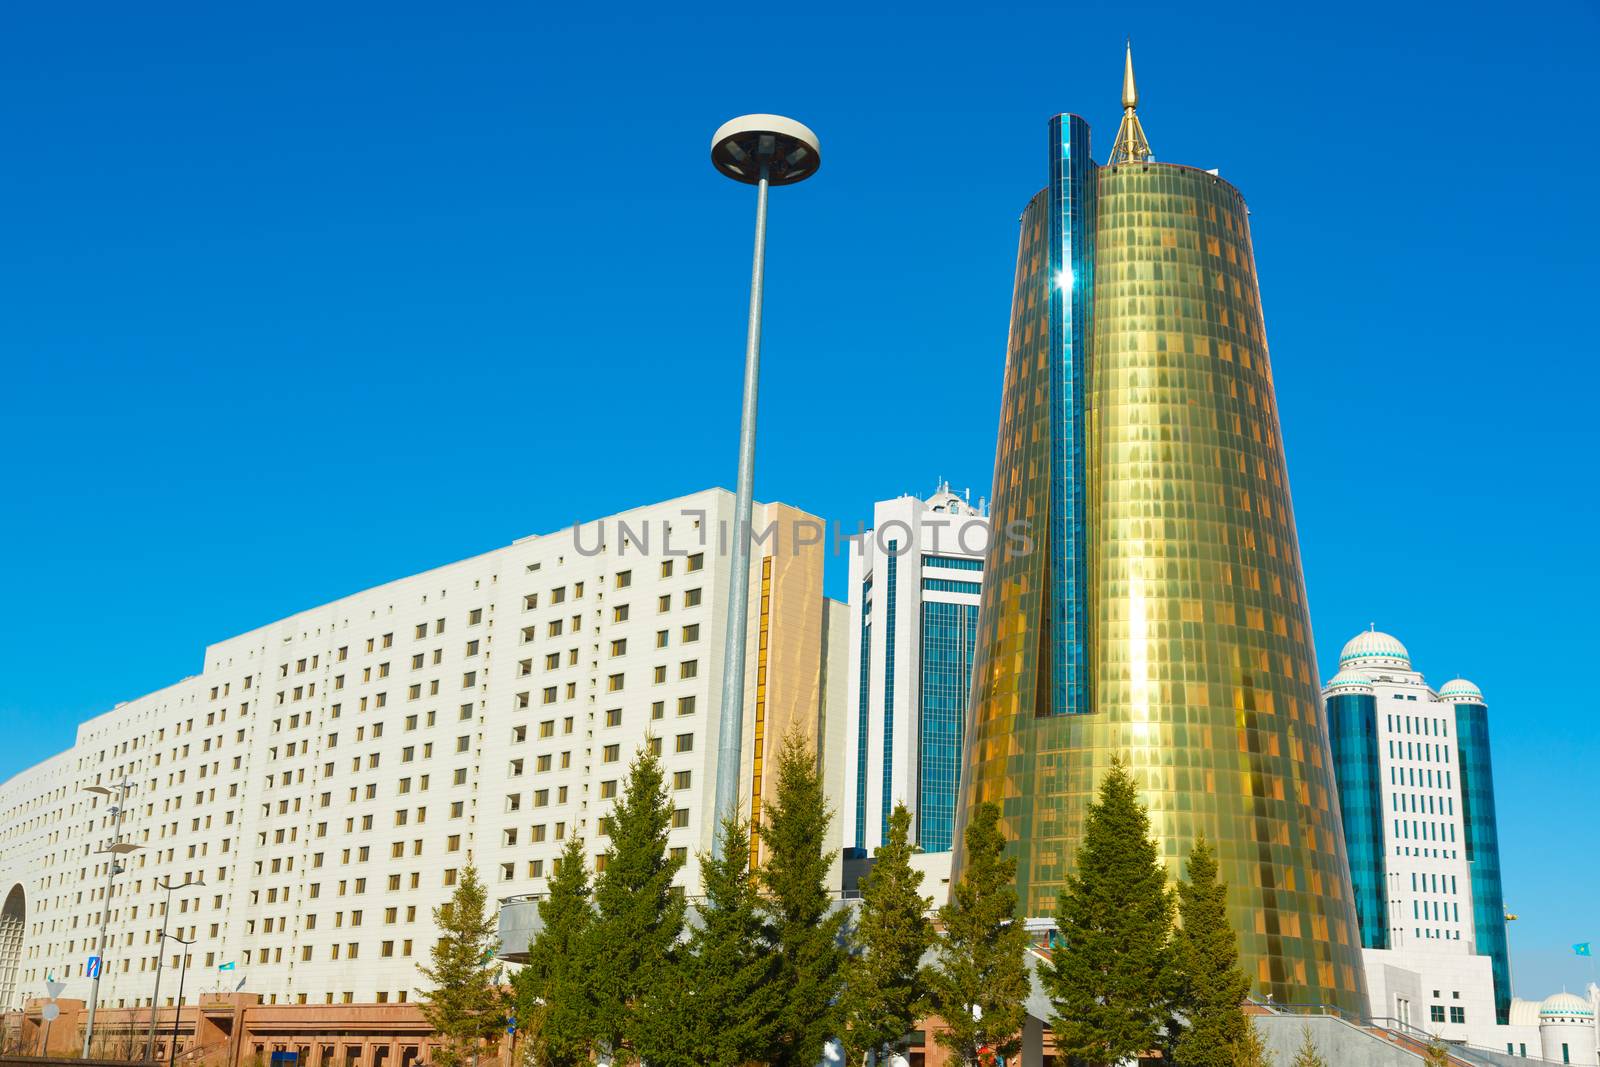 Modern architekture of Astana, capital of Kazakhstan